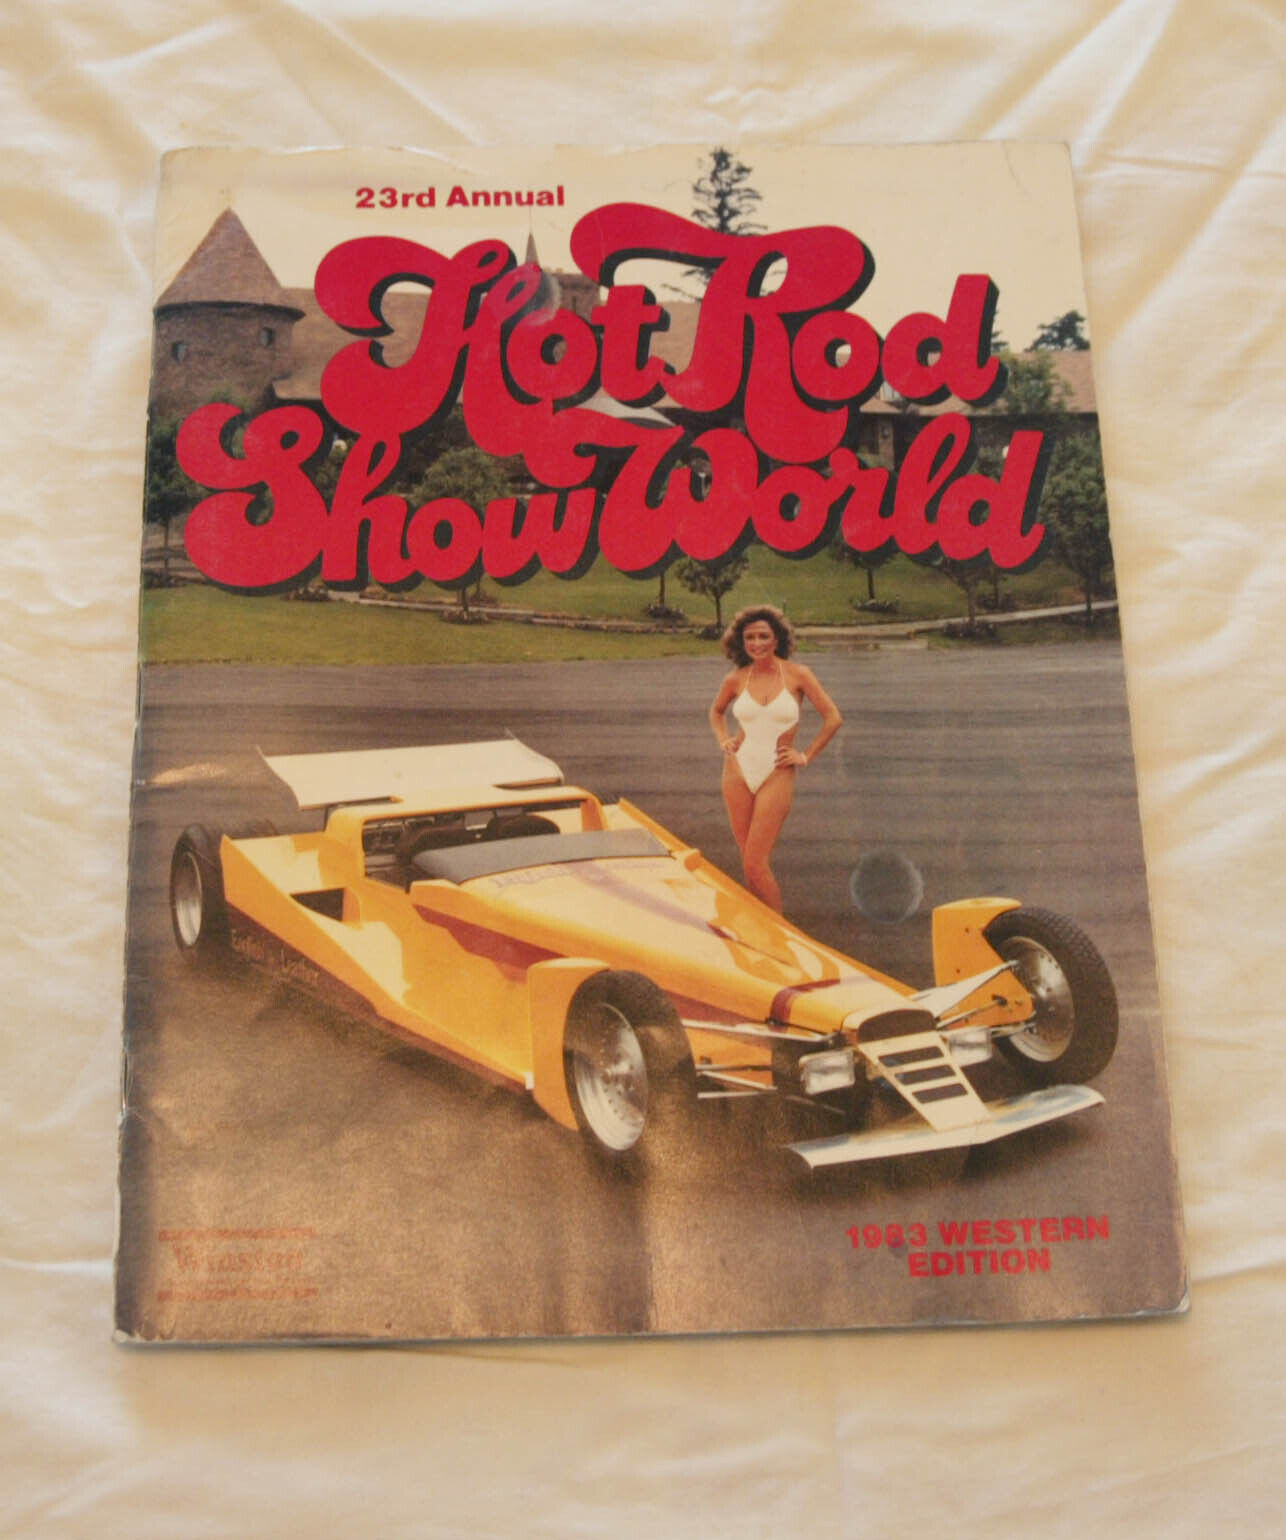 Hot Rod Show World 23rd Annual - 1983 Western Edition